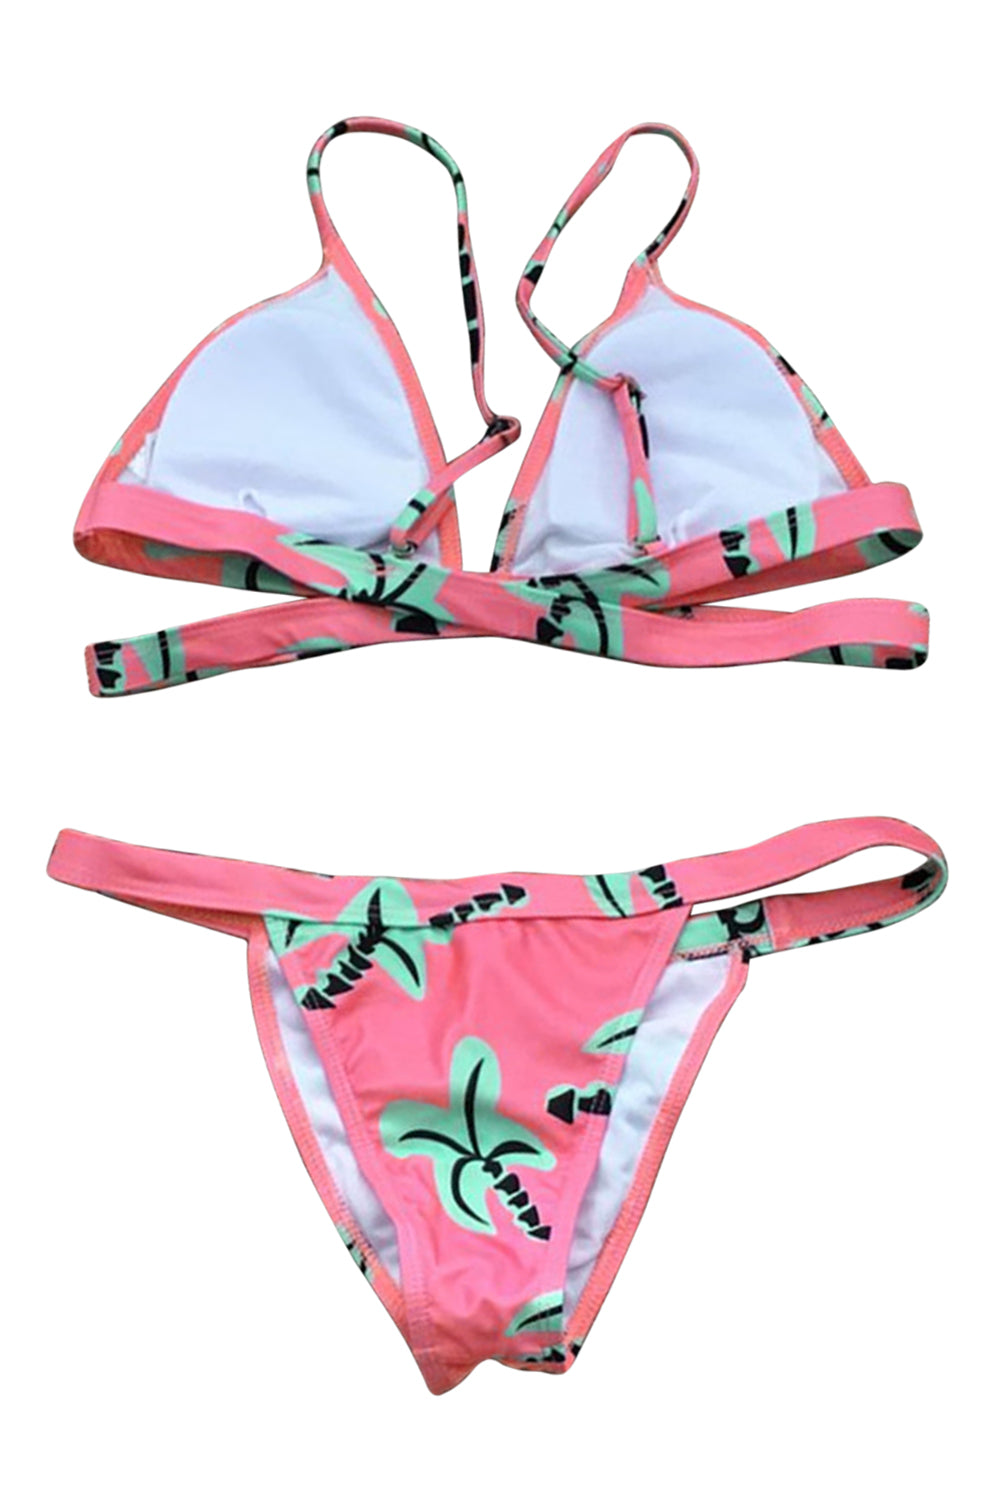 Iyasson Tropical Trees Printing Triangle Brazilian Bikini Set